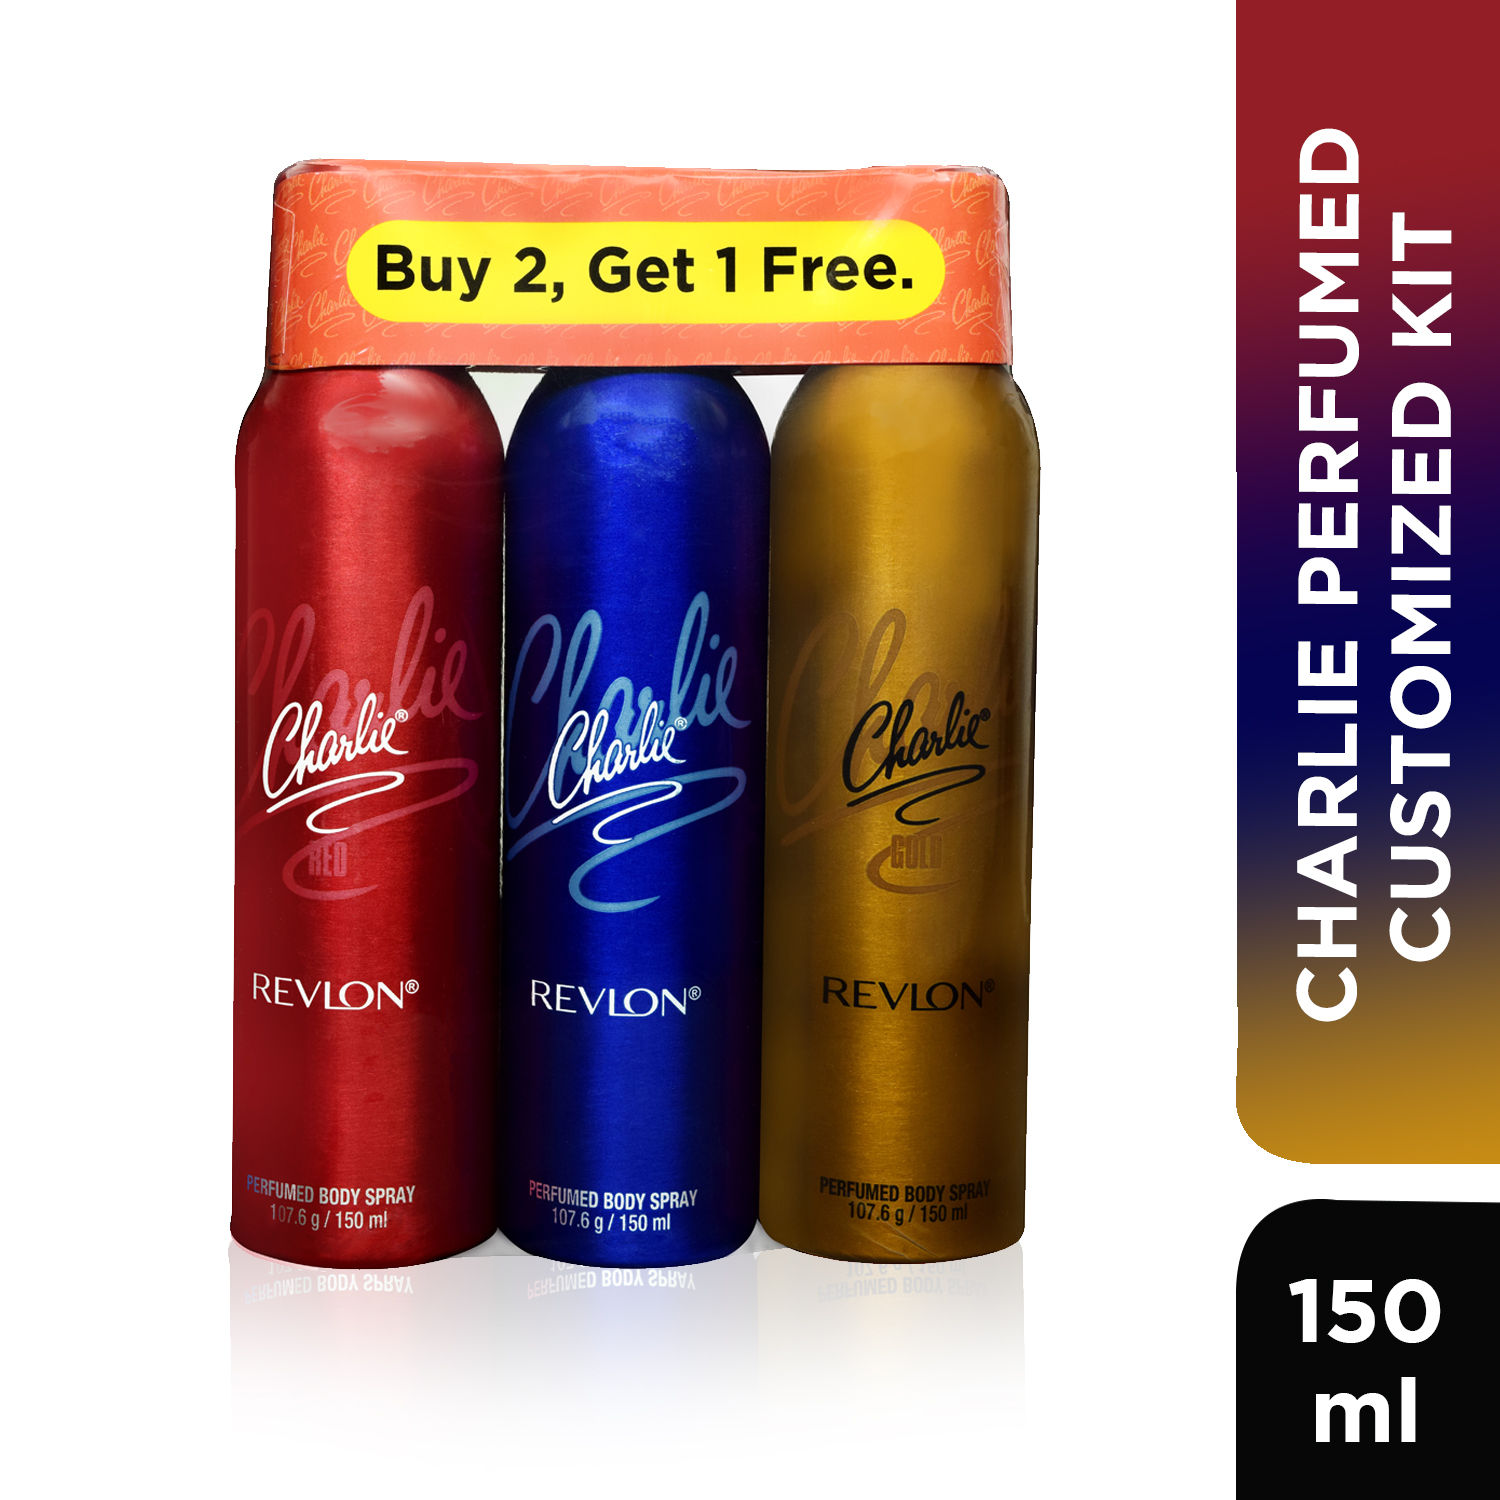 Revlon Charlie Deodorant Combo ( Buy 2 Get 1 Free )